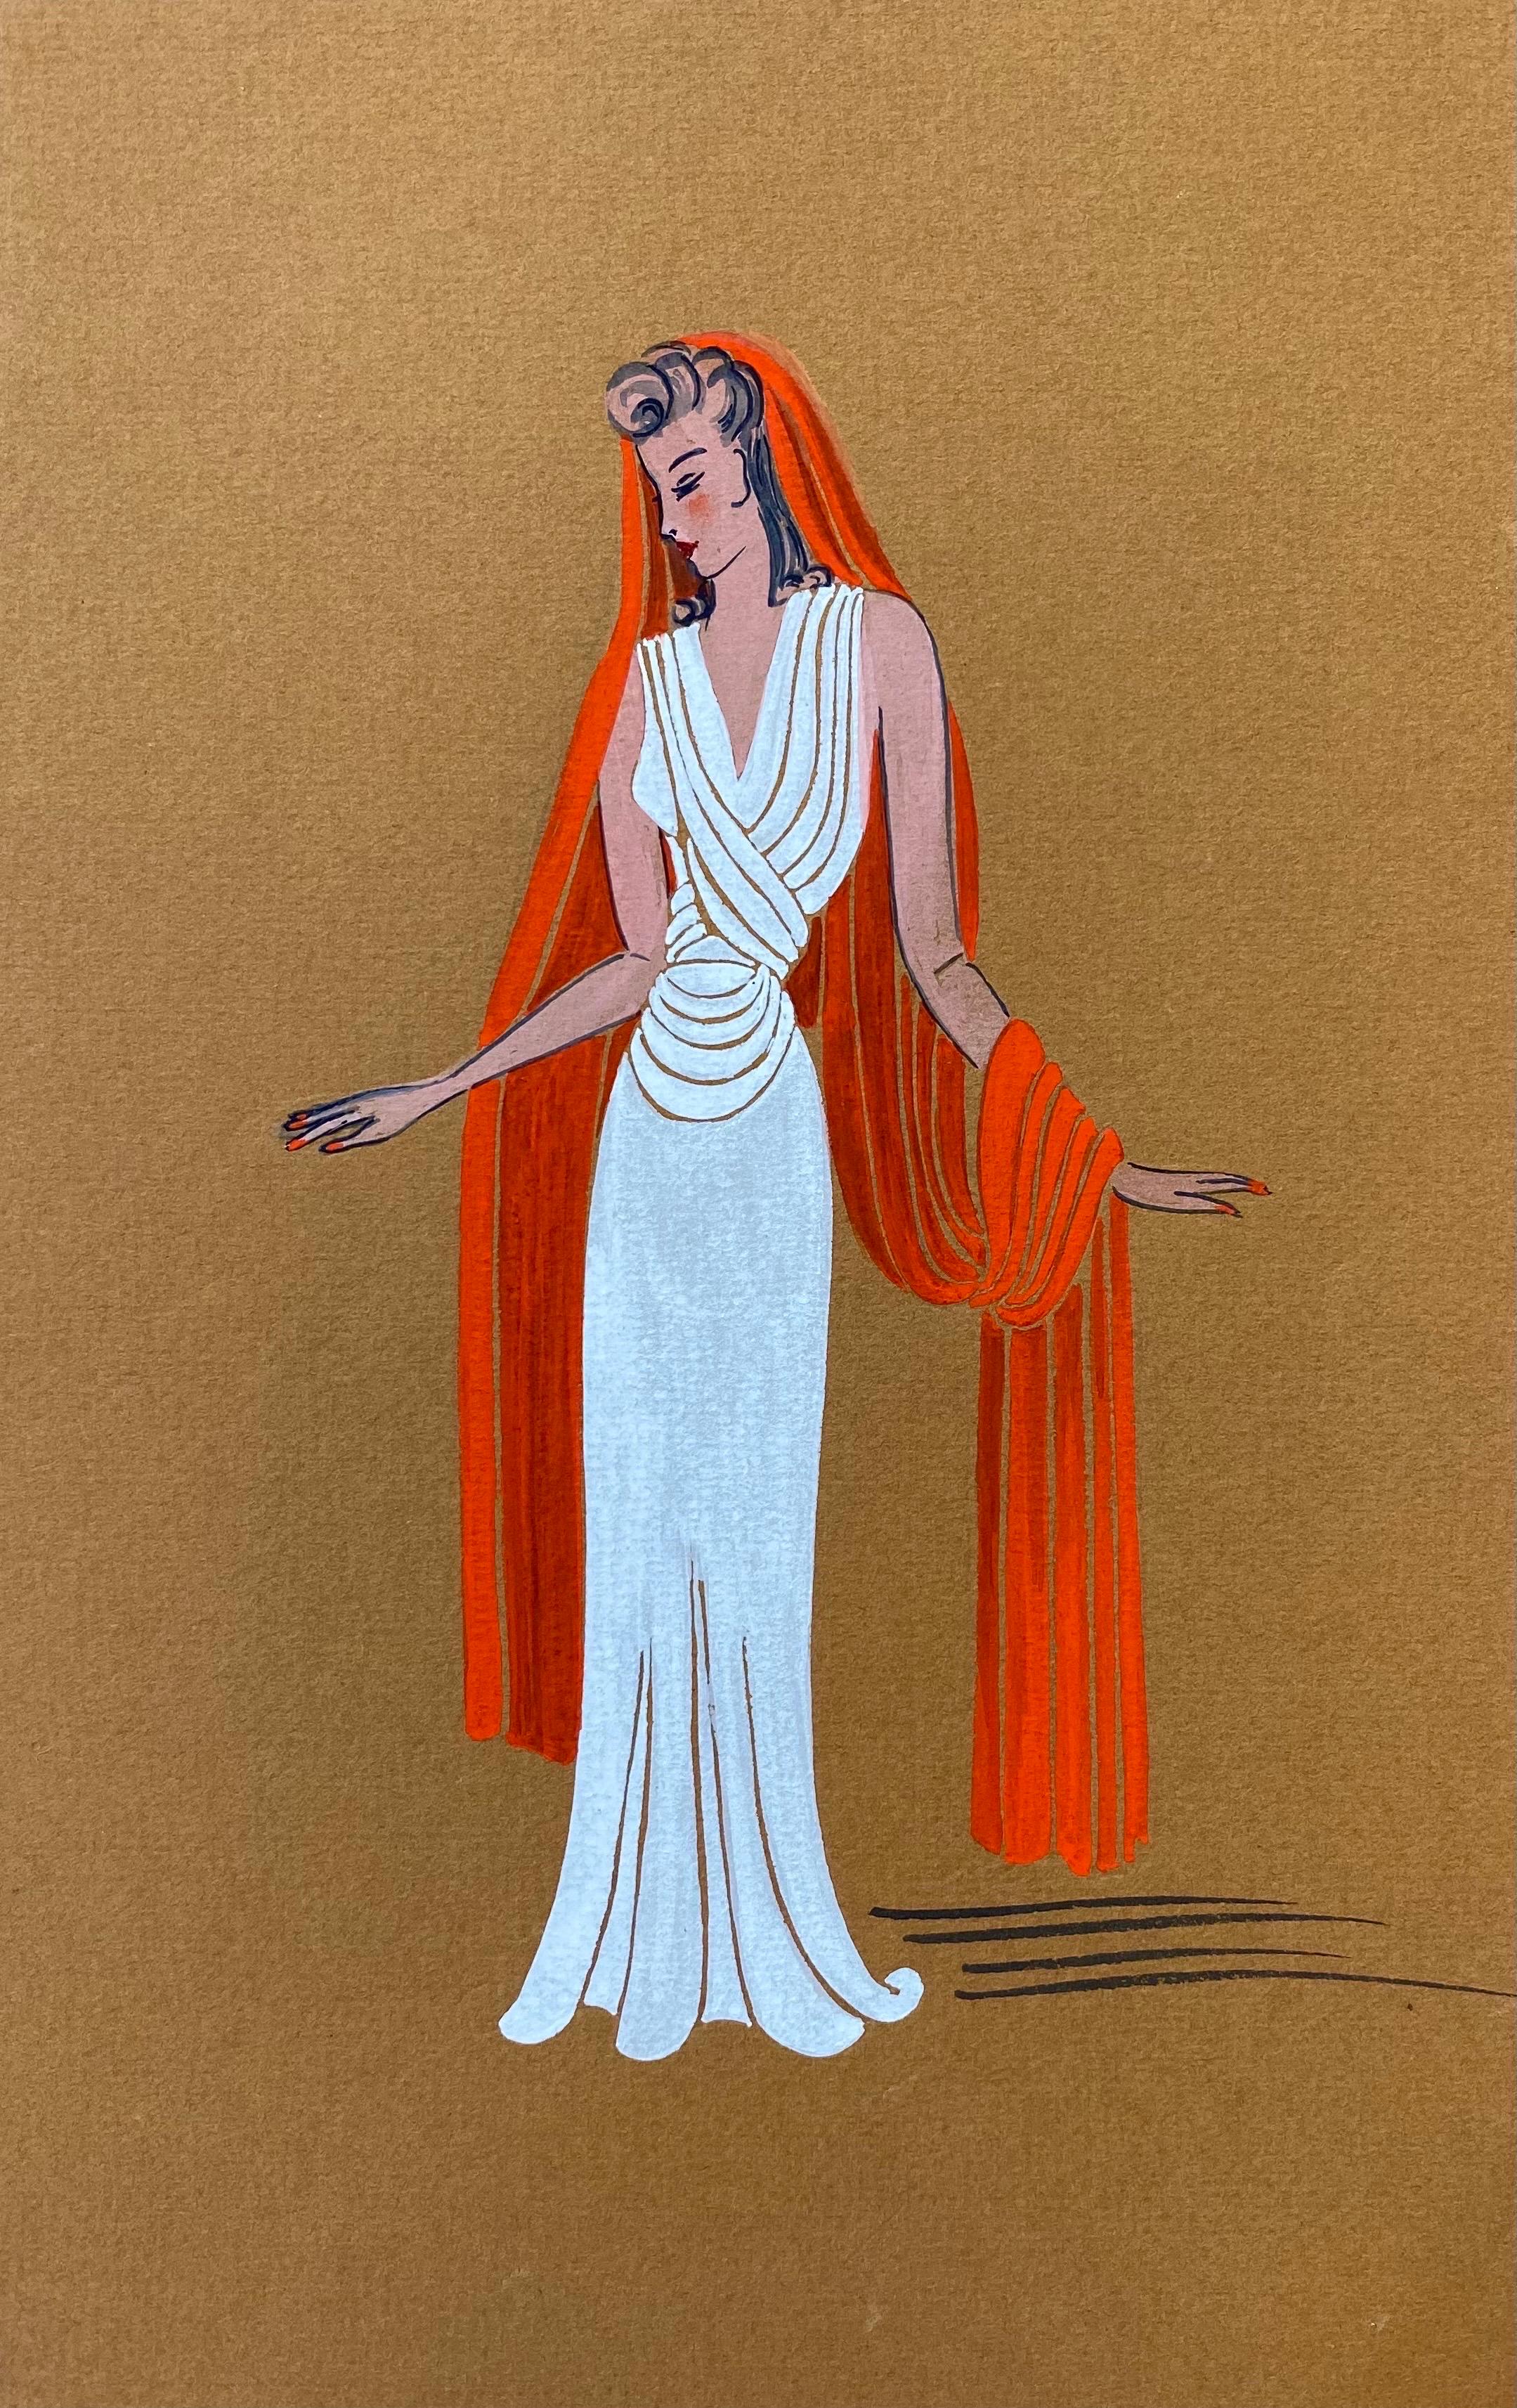 Geneviève Thomas Portrait - 1940's Fashion Illustration - Lady In White Dress With Draped Orange Head Scarf